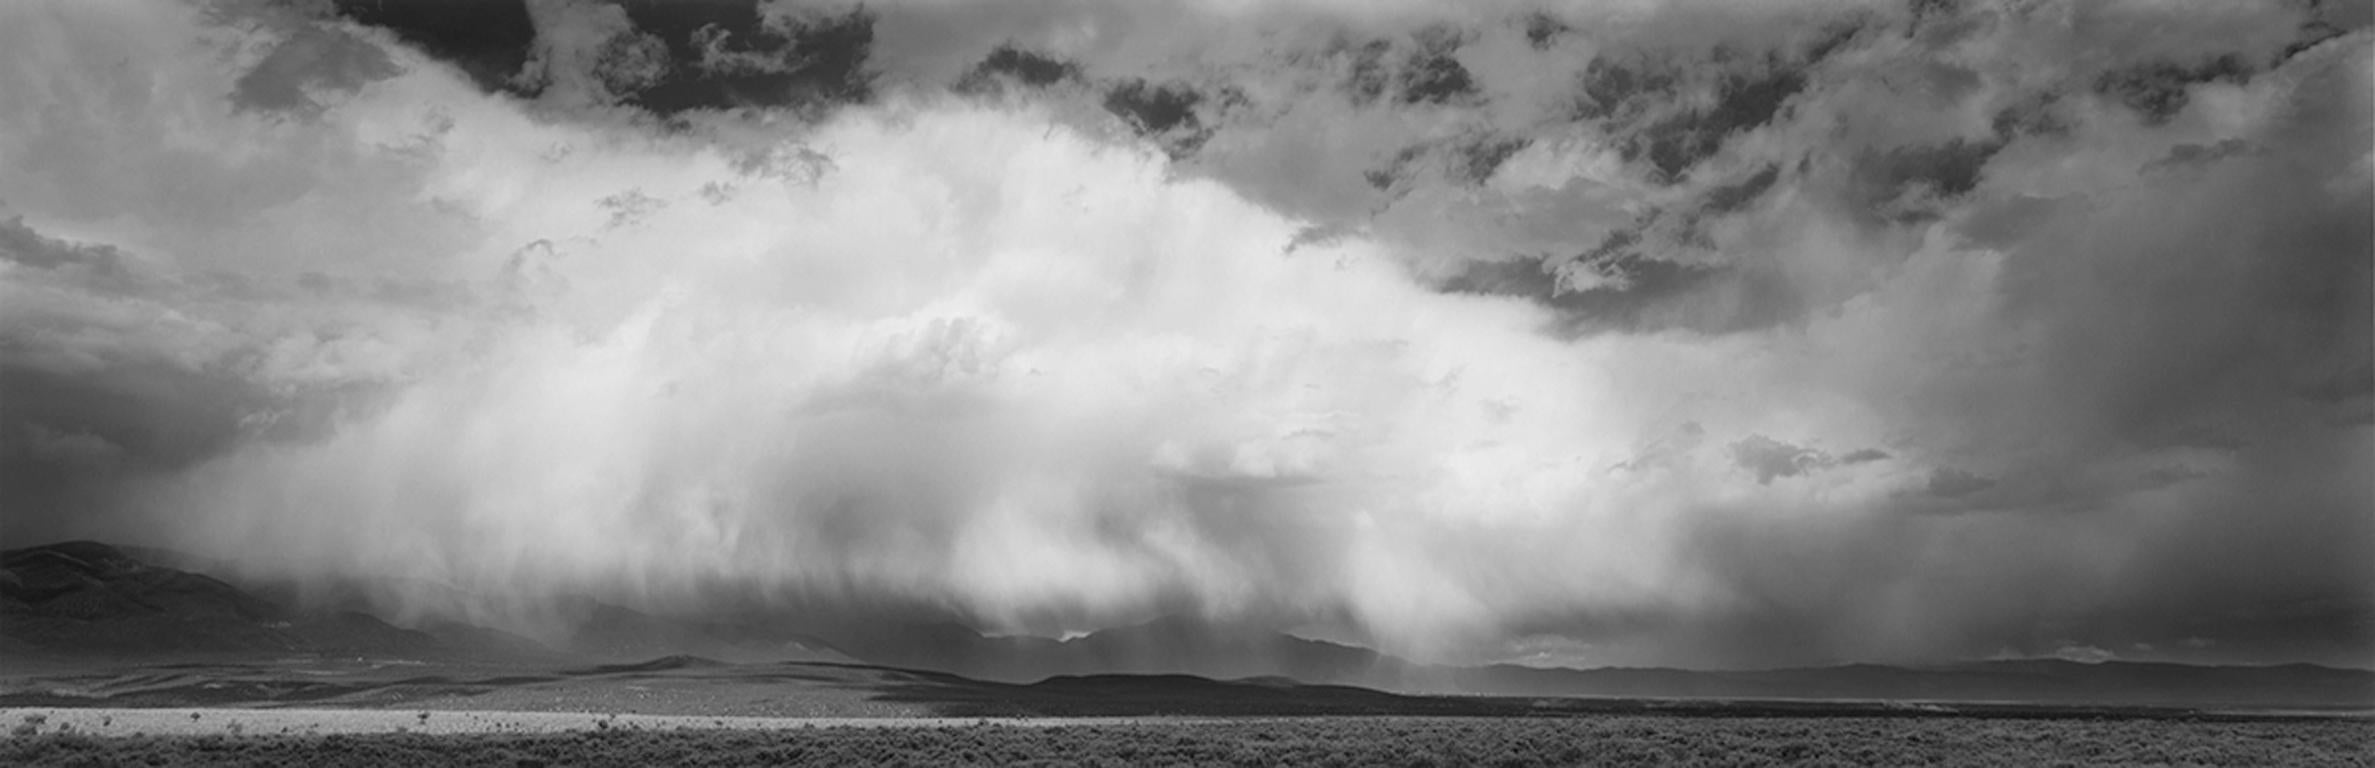 David H. Gibson Black and White Photograph - Walking Rain, Hondo Mesa, New Mexico